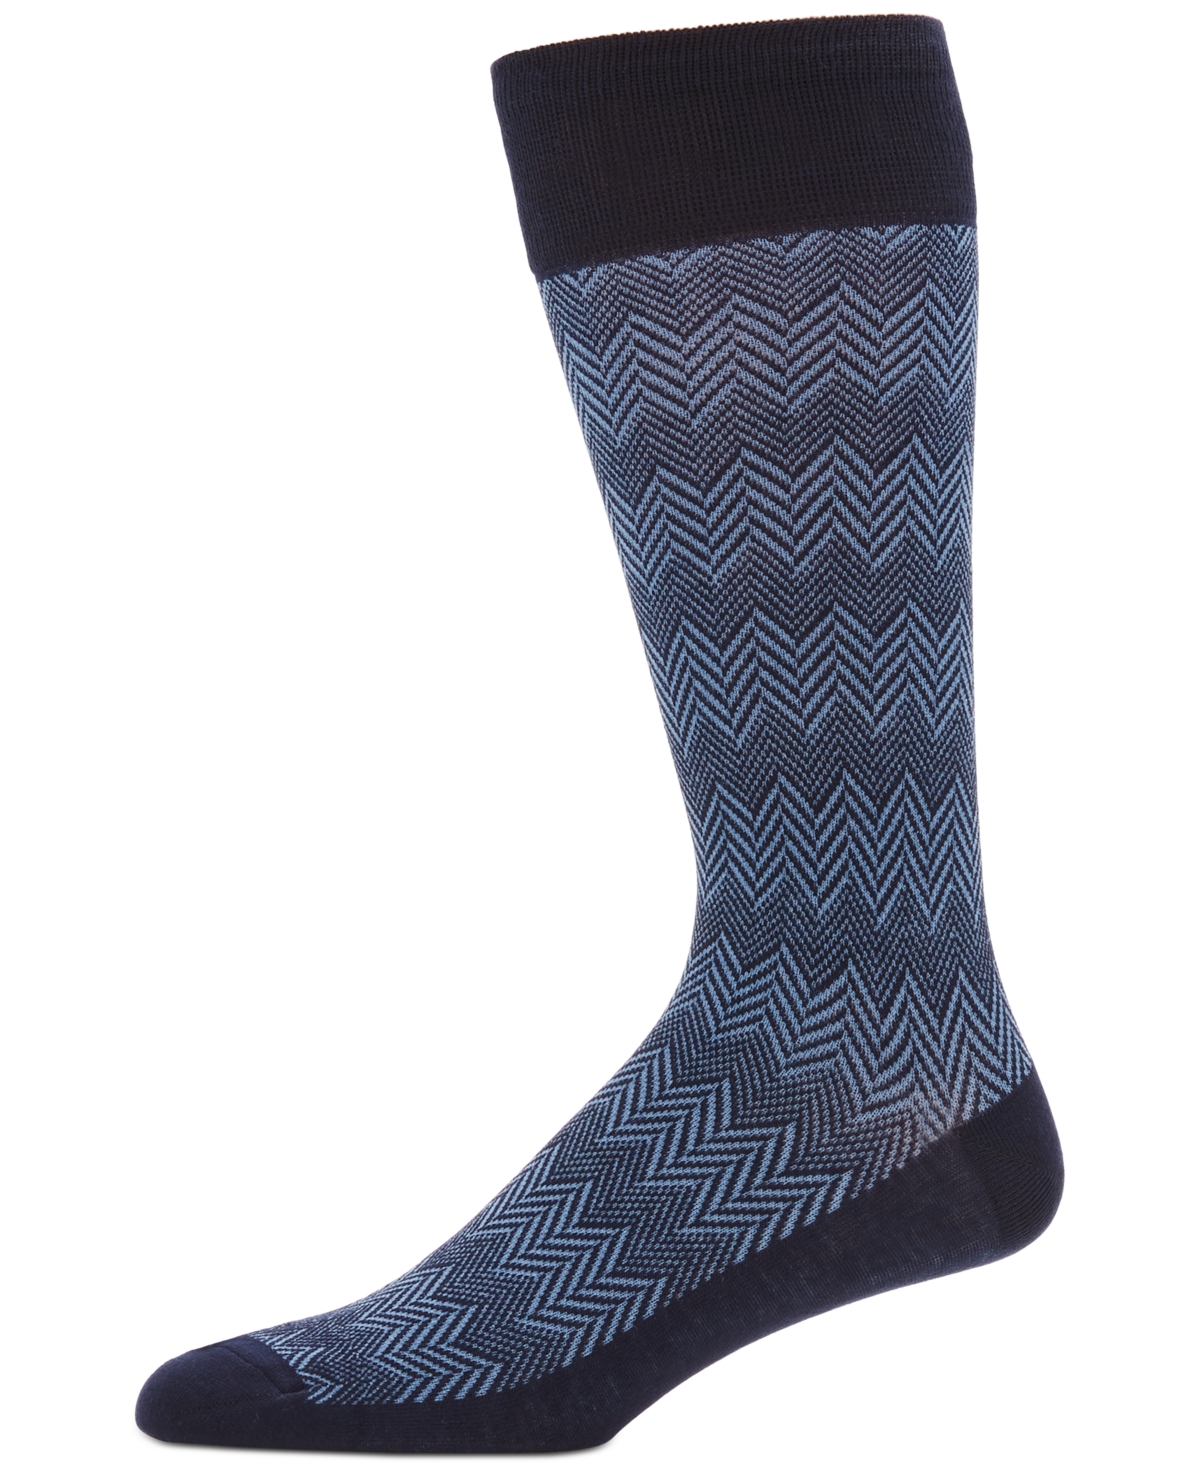 Men's Herringbone Moisture-Wicking Dress Socks - Sapphire